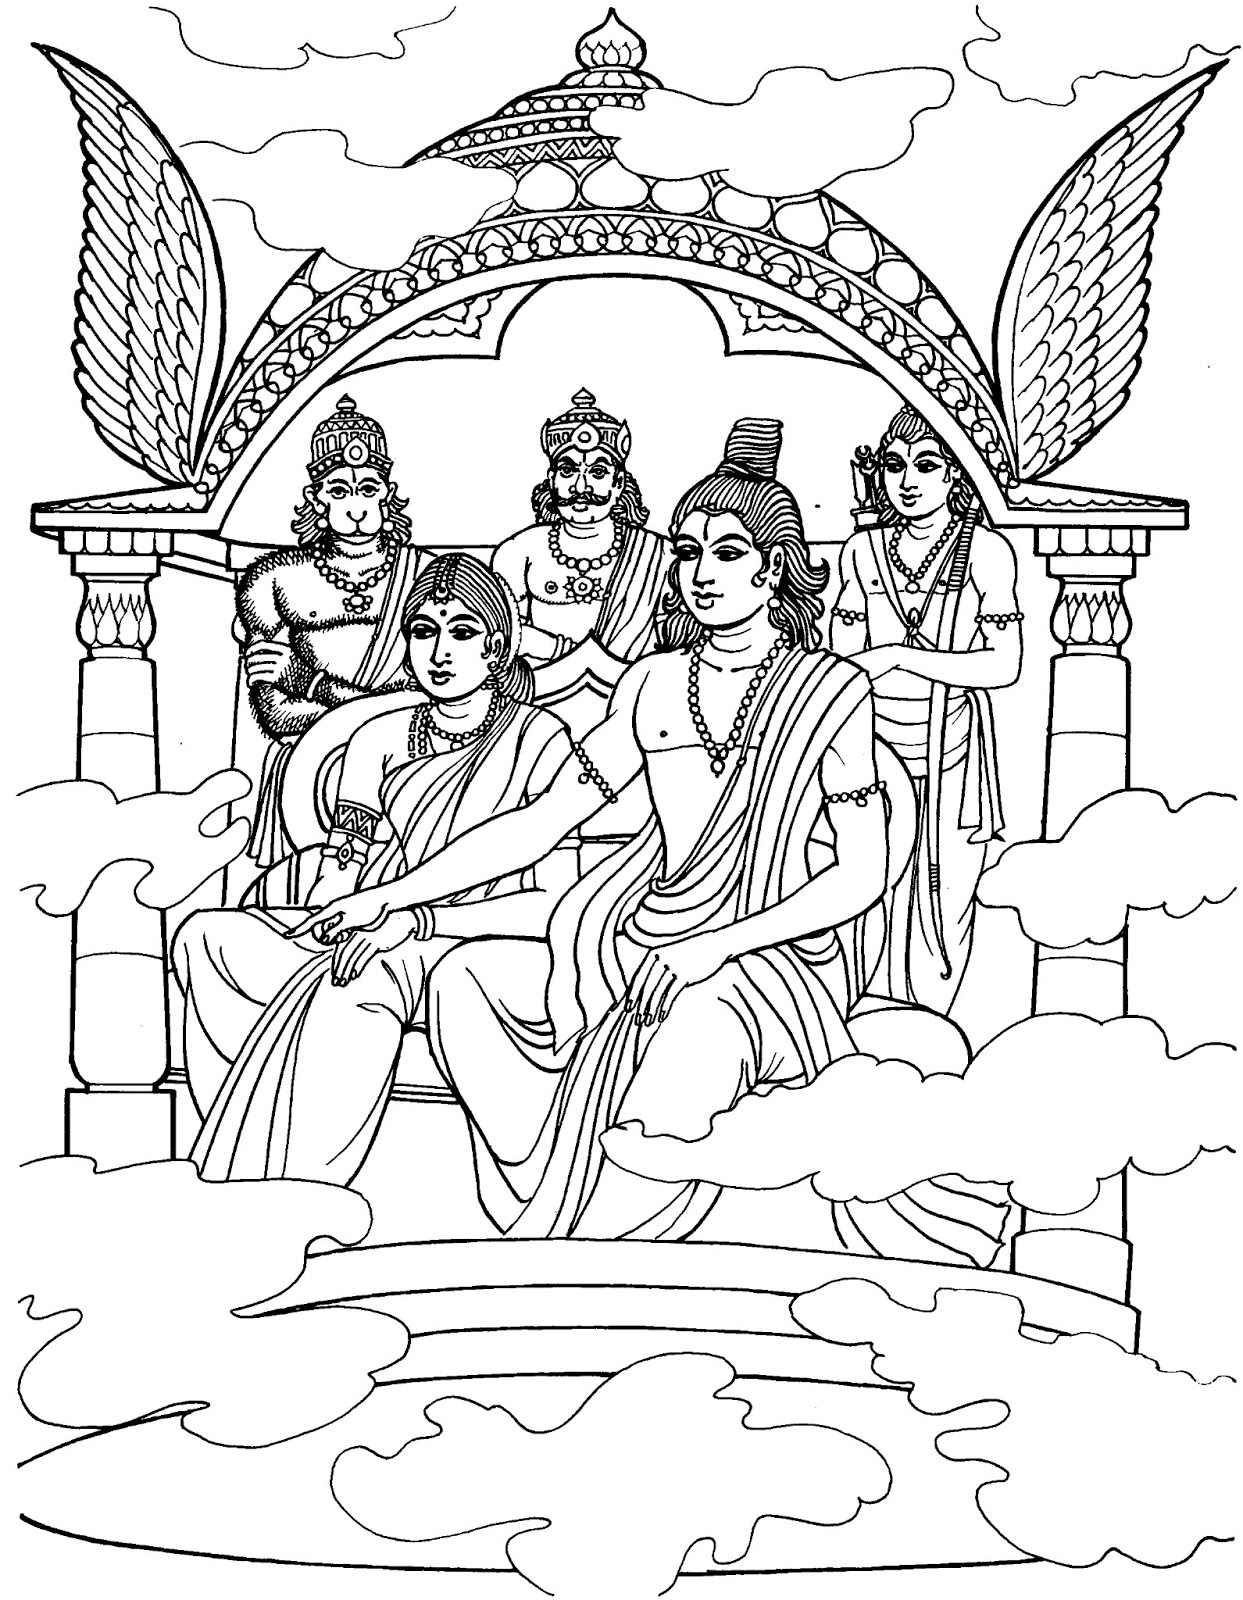 Bhagwan Ji Help me: Hanuman's love for Lord Ram